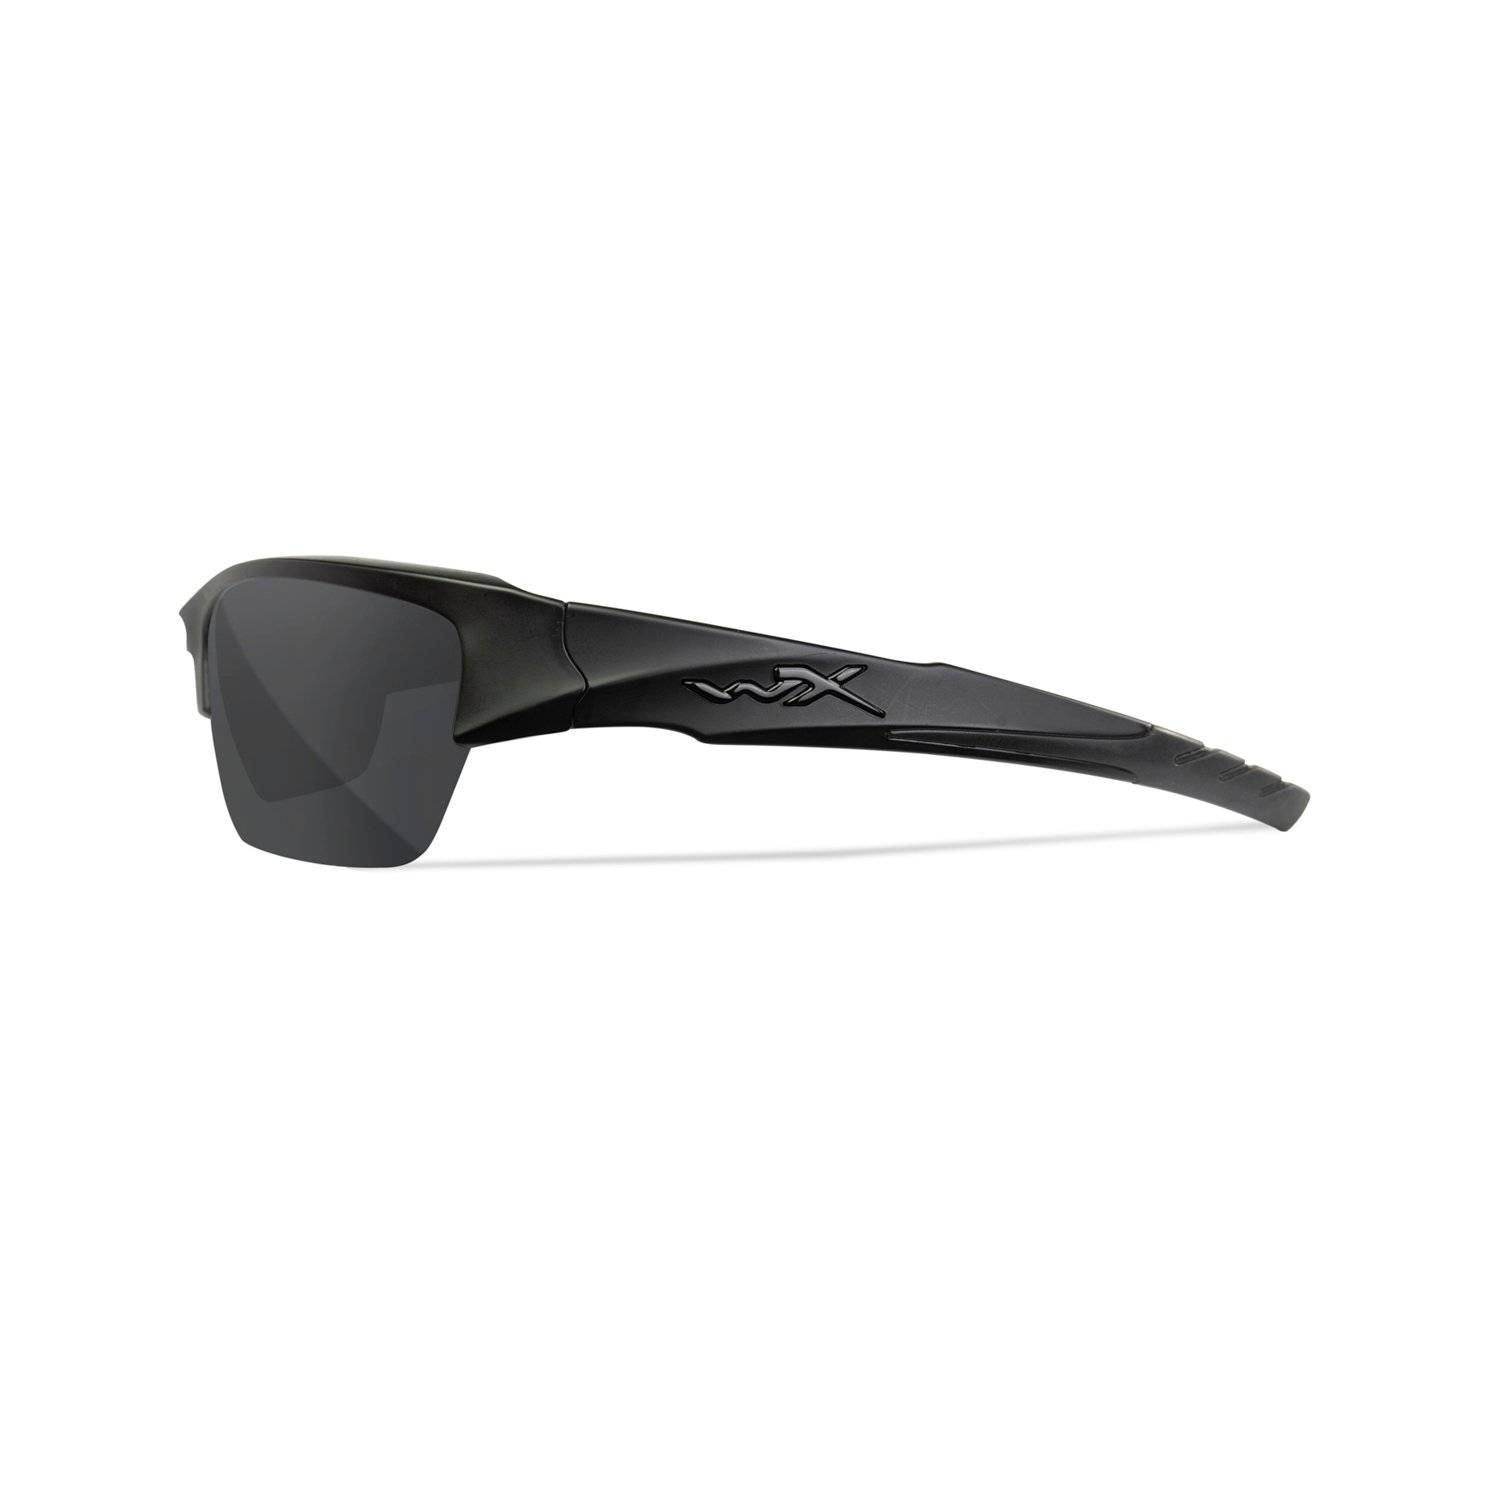 Wiley X Valor Black Smoke Grey Lenses Tactical Sunglasses Brand New